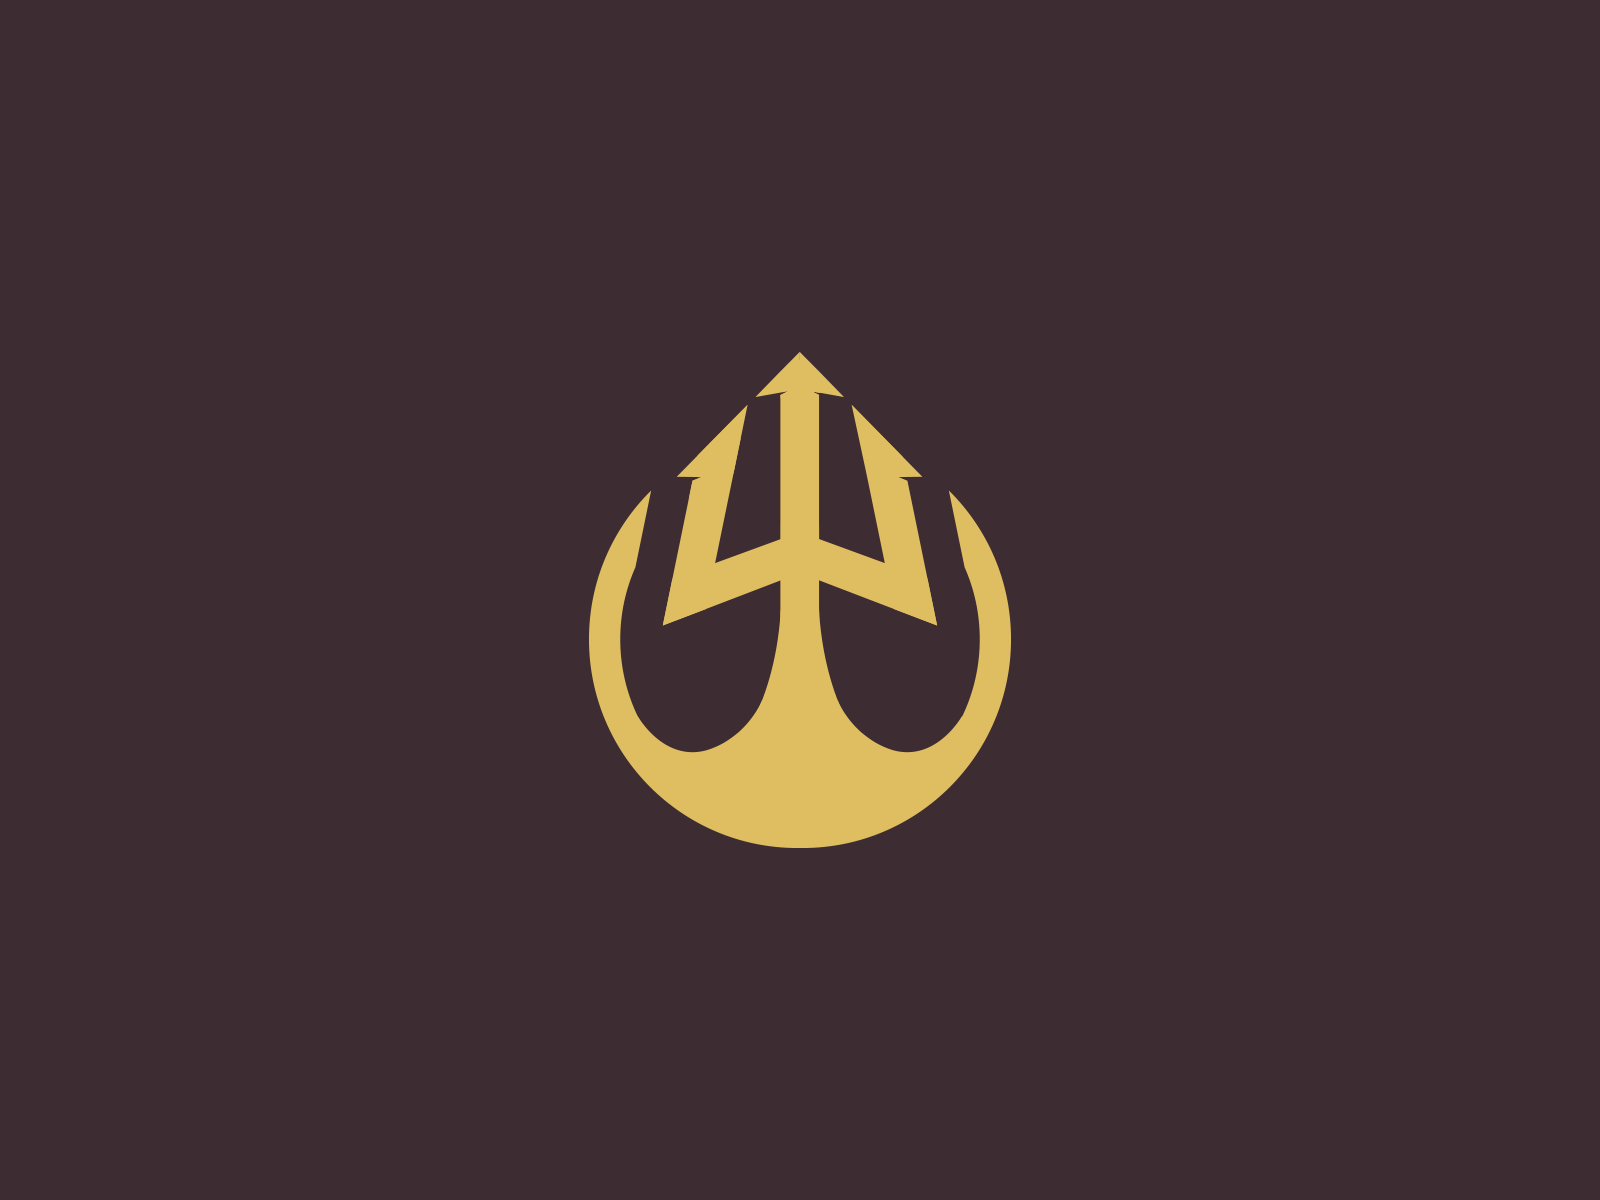 Trident script. Трезубец logo. Trident Design логотип. Эмблема трезубец Нептуна. Trident Design Британия логотип.